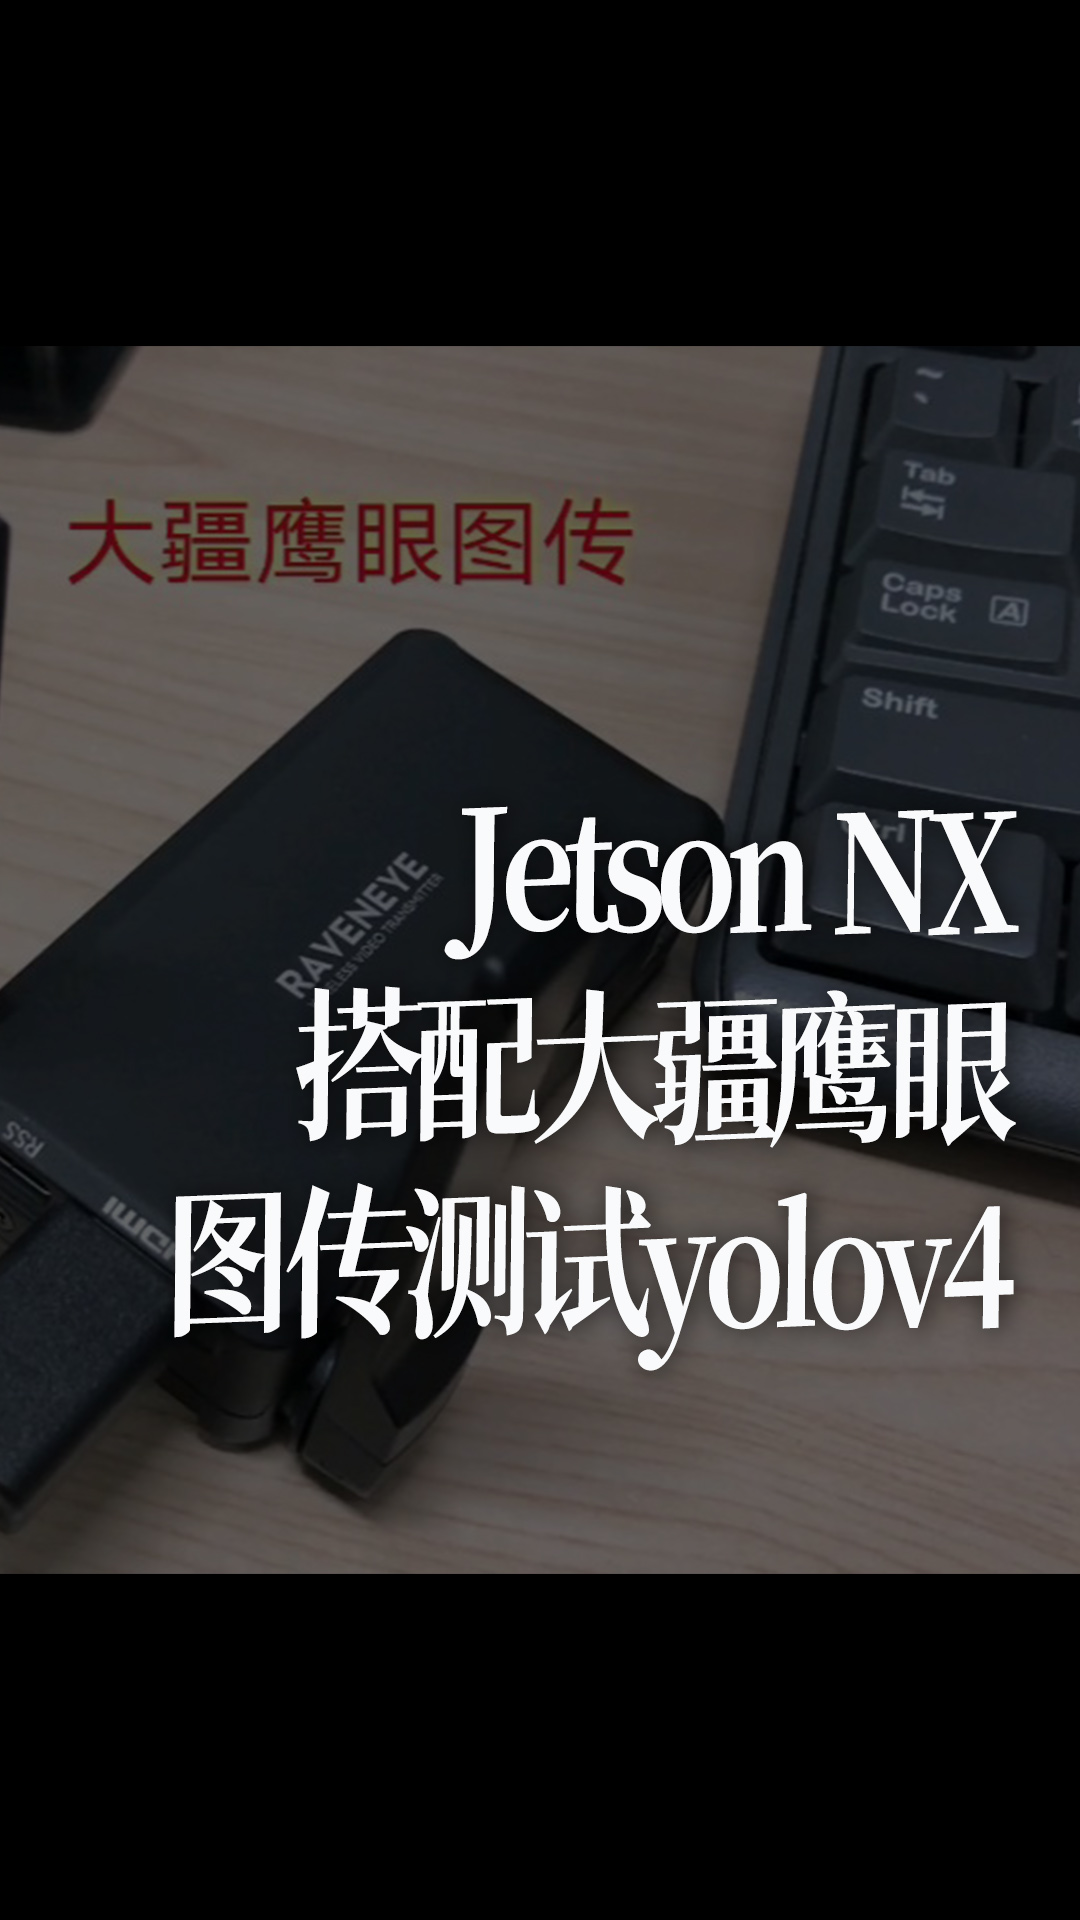 Jetson NX搭配大疆鹰眼图传测试yolov4